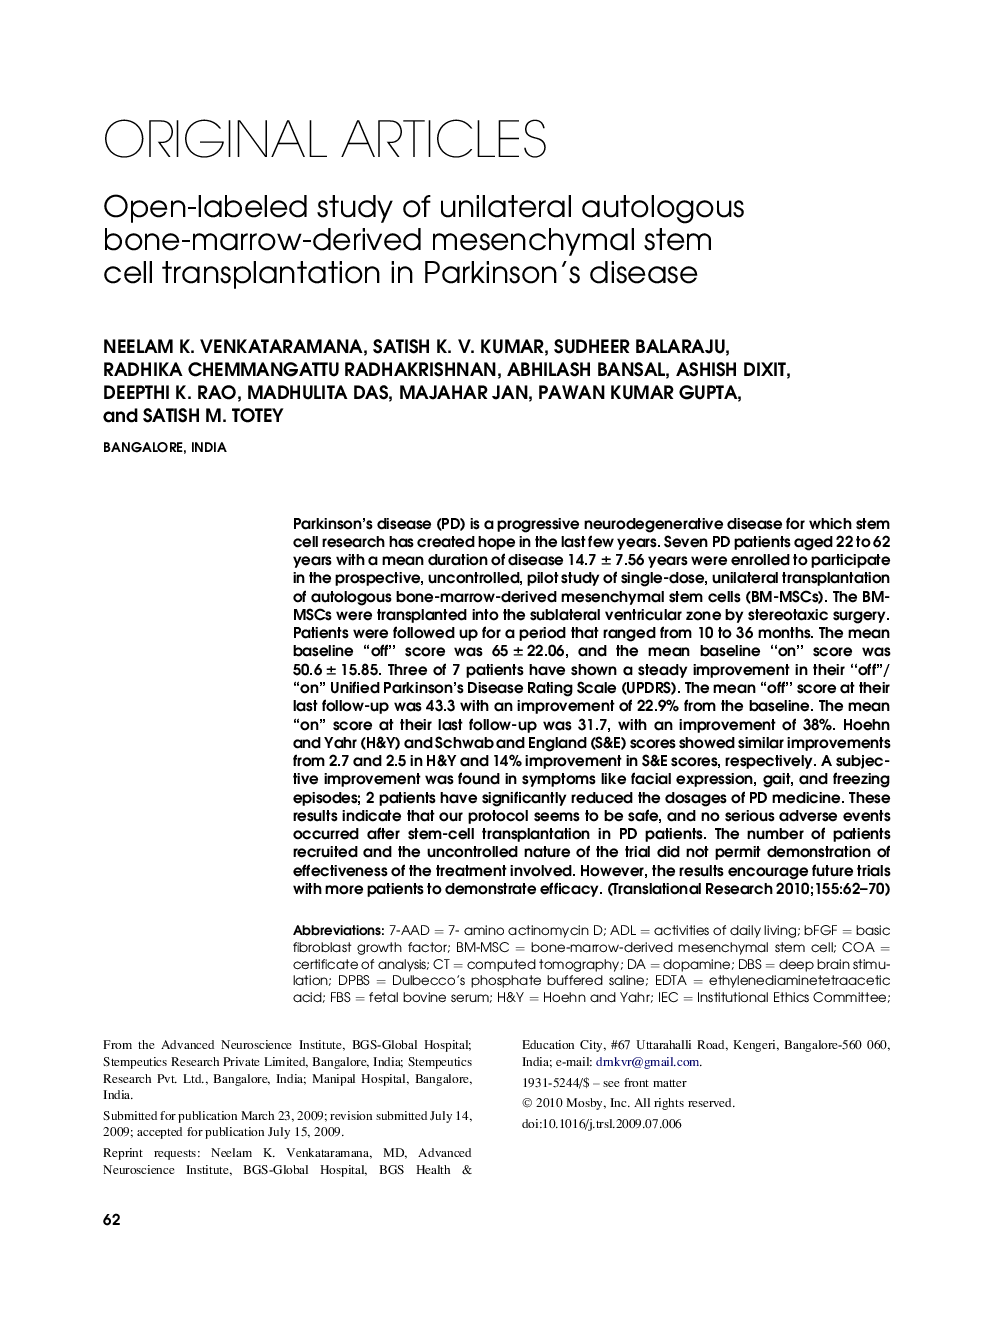 Open-labeled study of unilateral autologous bone-marrow-derived mesenchymal stem cell transplantation in Parkinson's disease